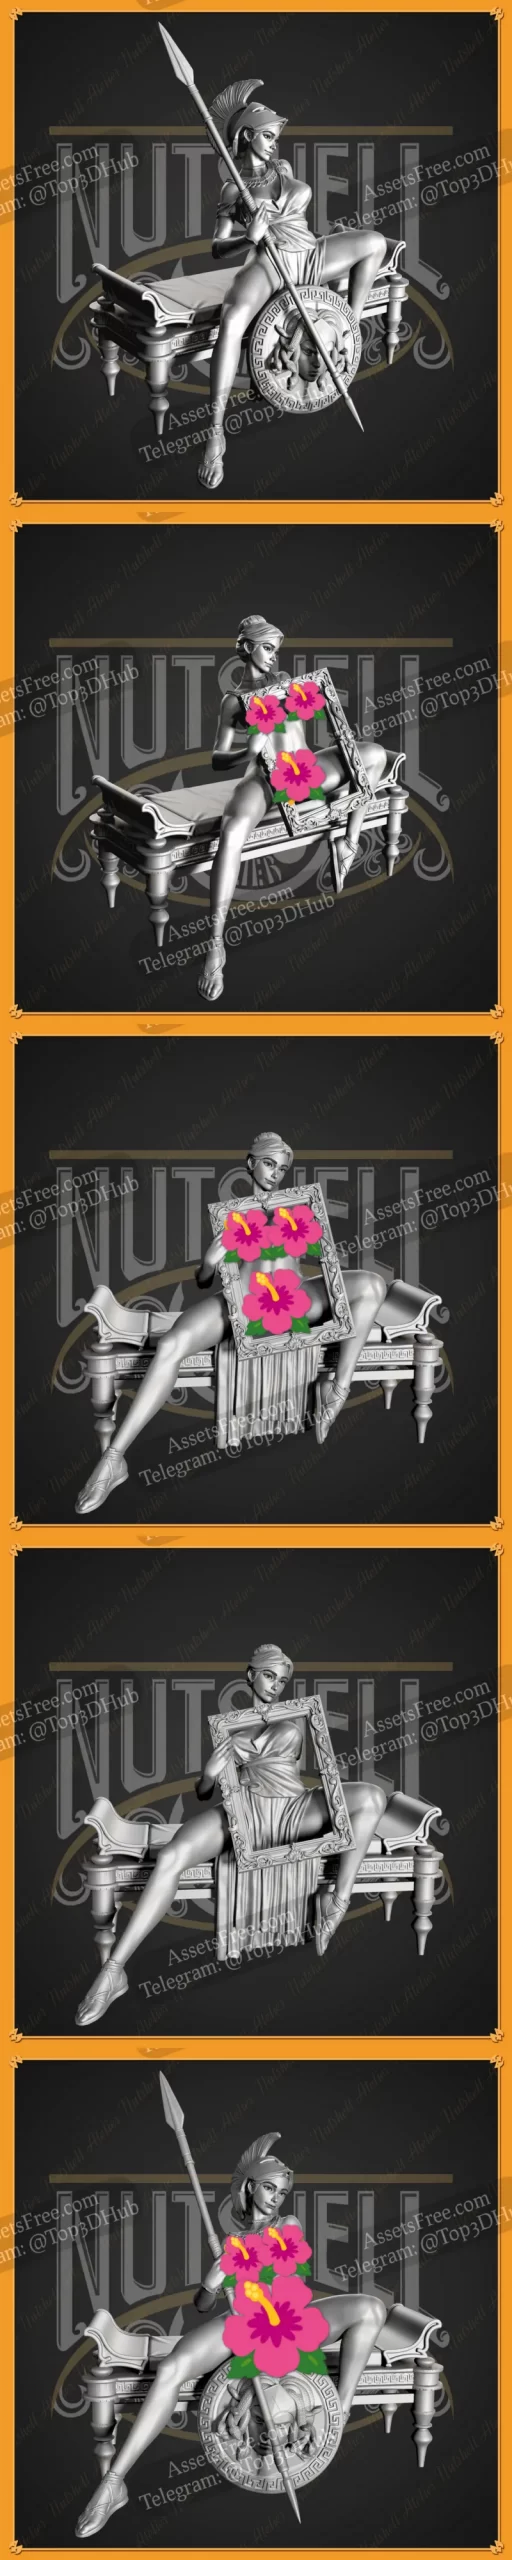 Nutshell Atelier - Athena X ray frame girl